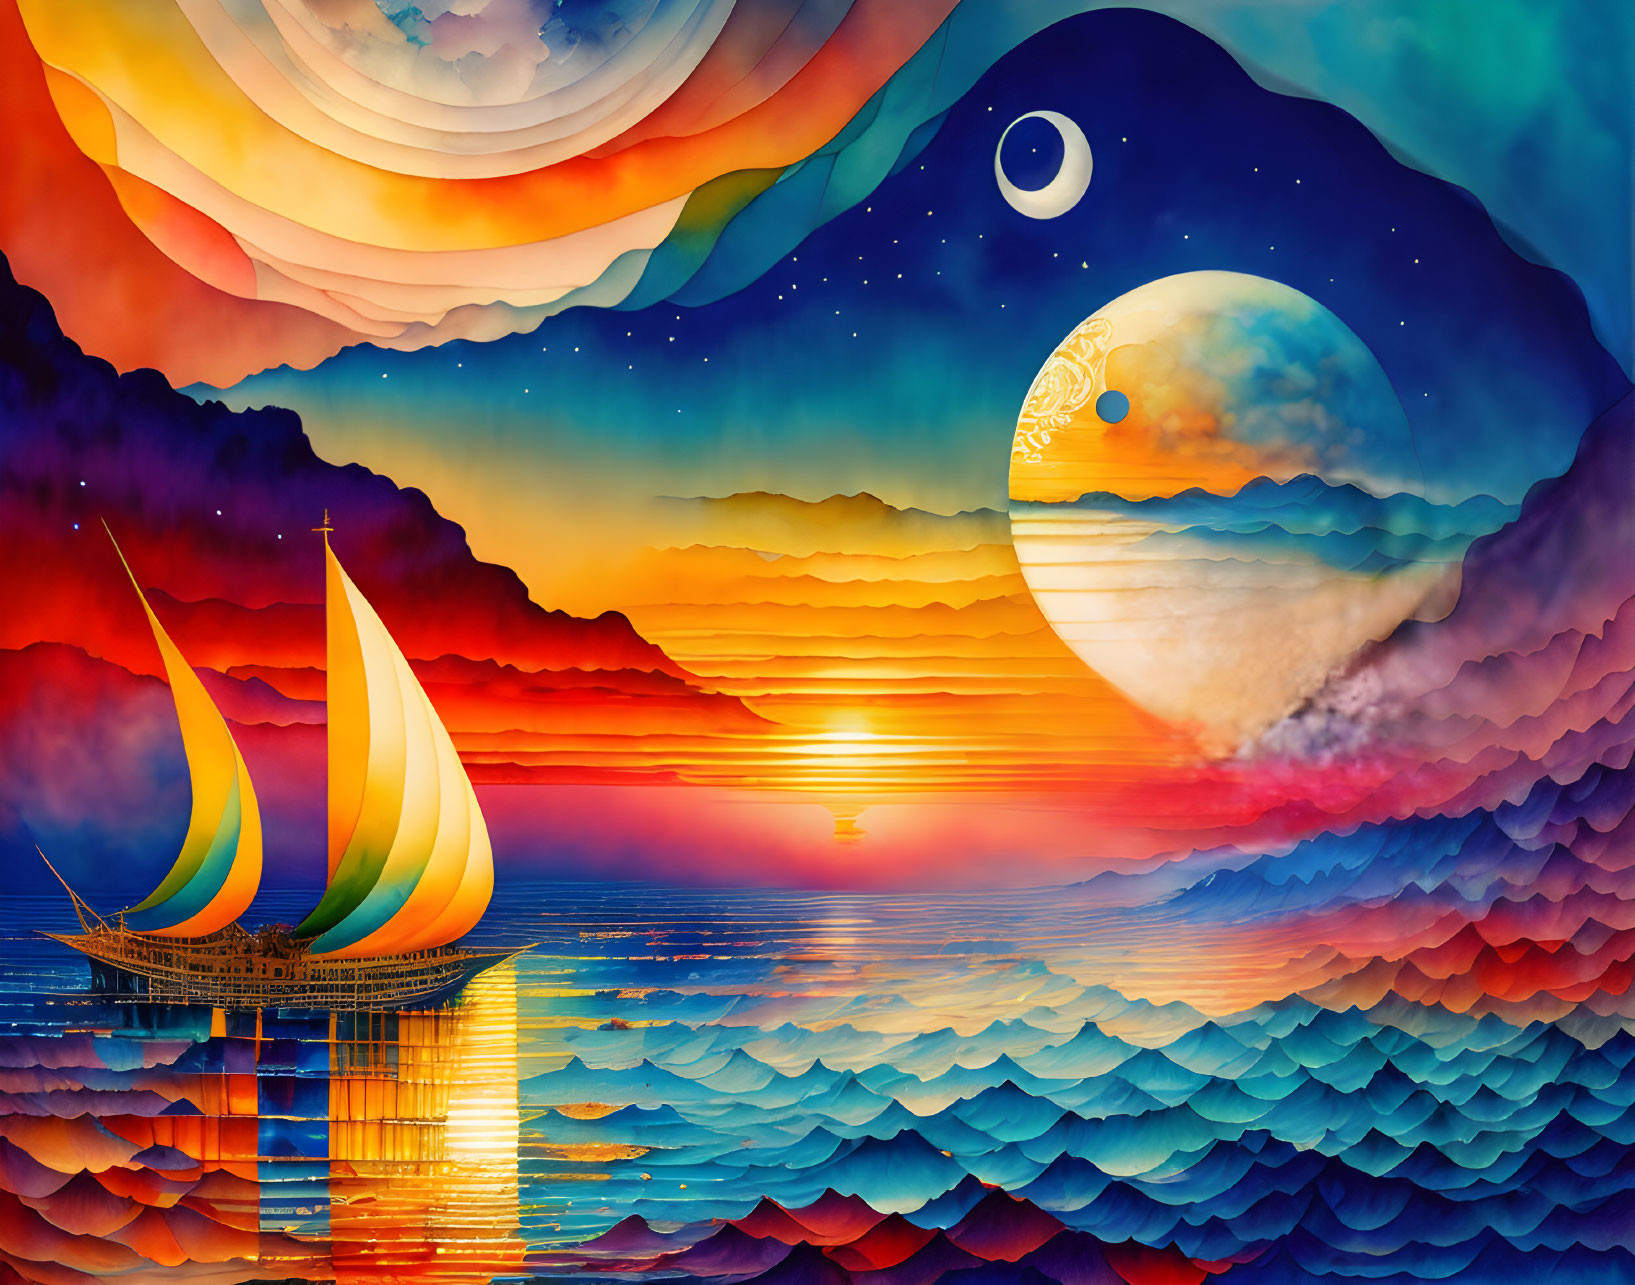 Surreal seascape with sailboat, waves, yin-yang symbol, warm and cool